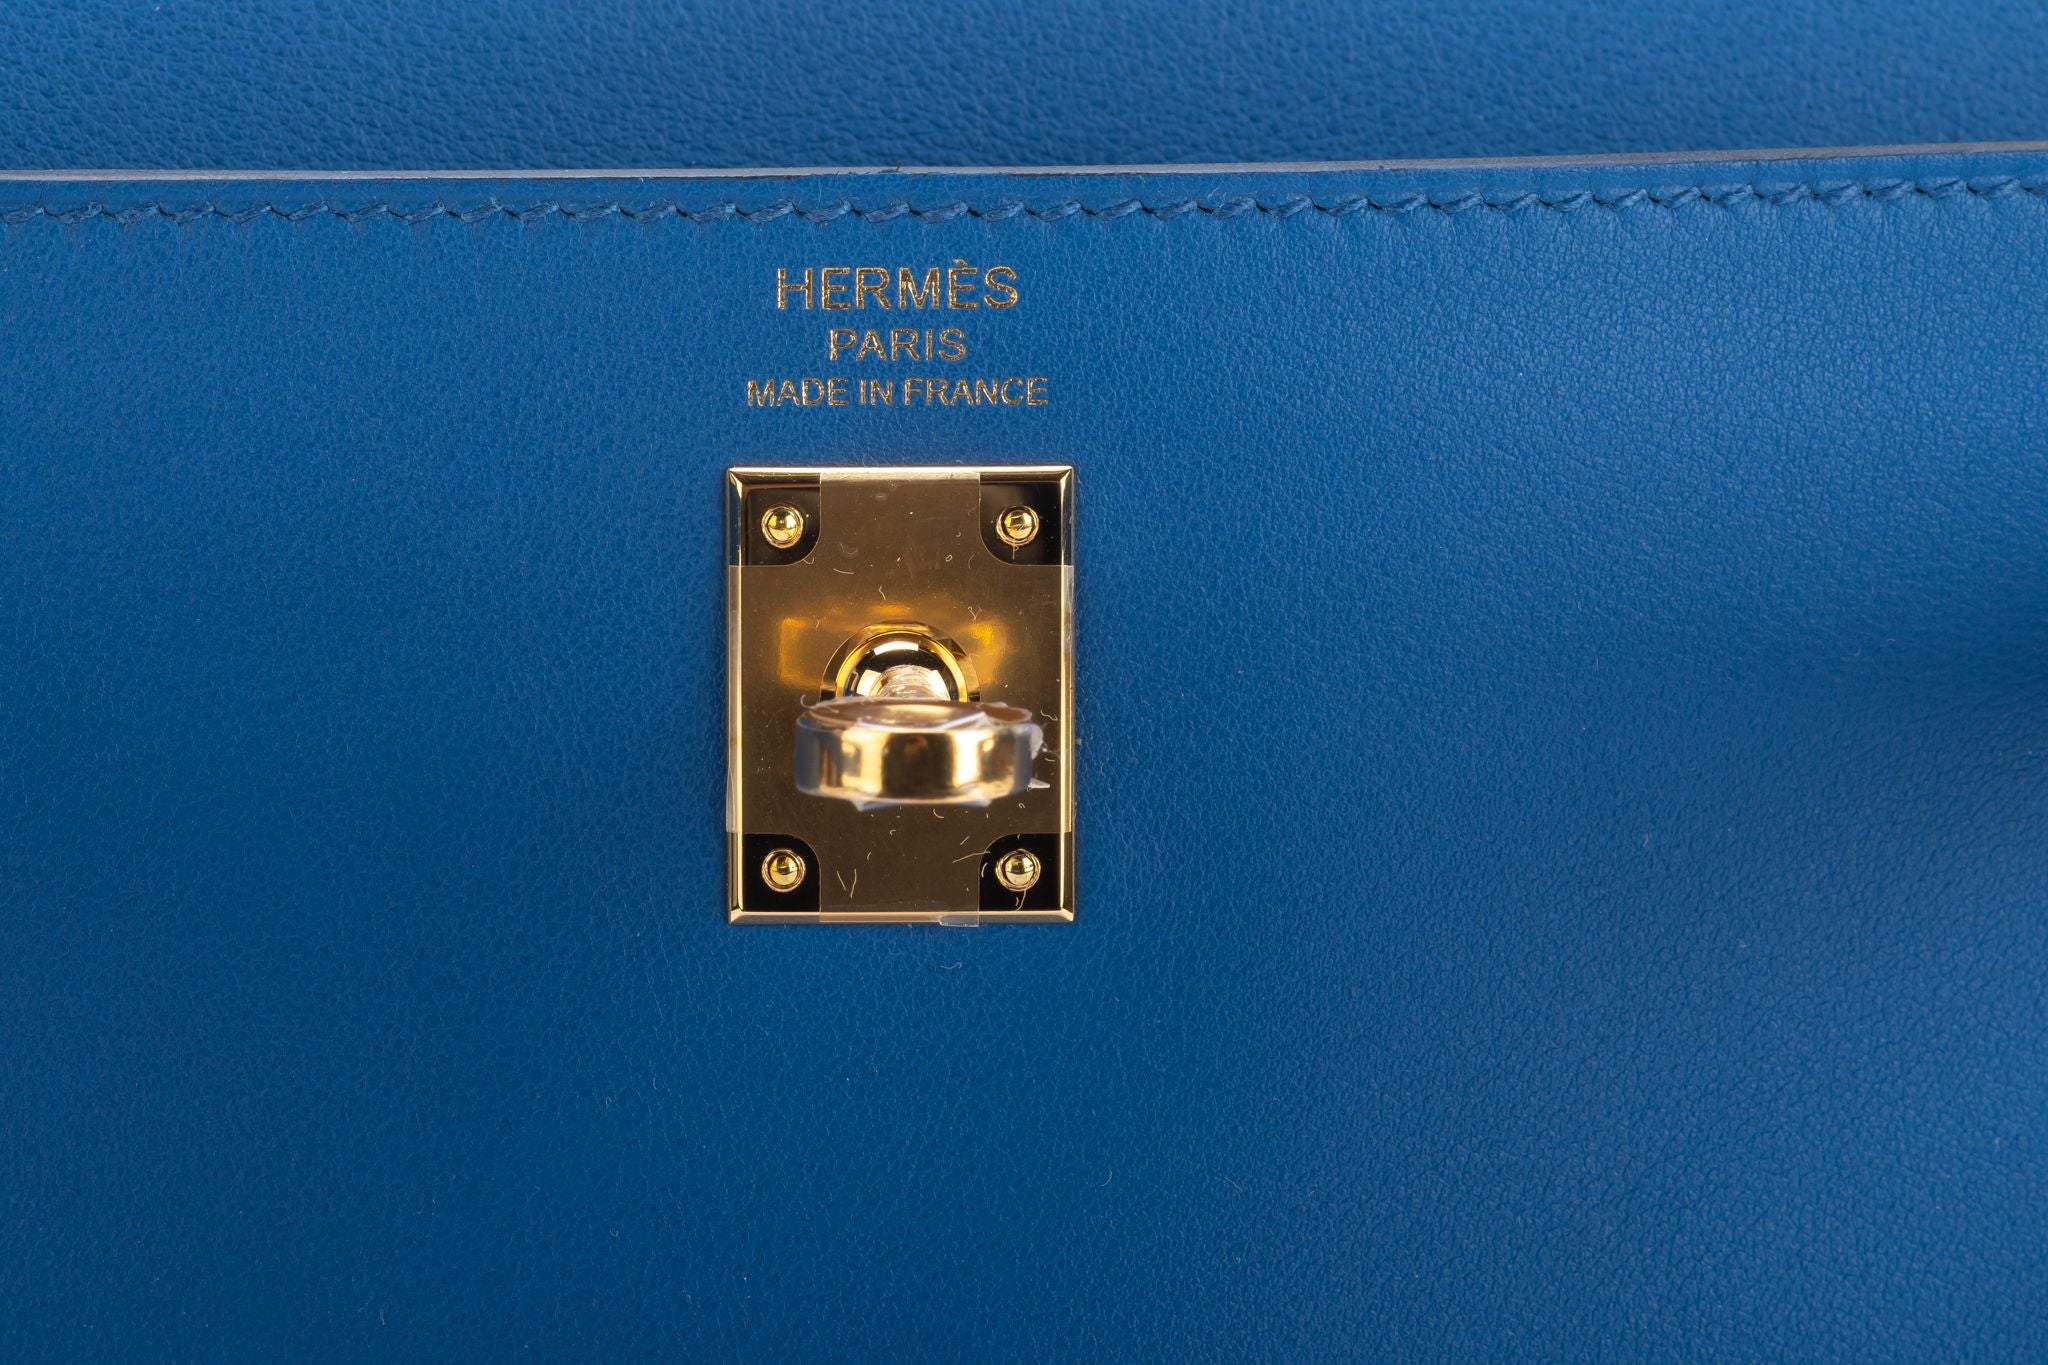 Hermès Kelly 25 In Bleu De France Swift Leather With Gold Hardware